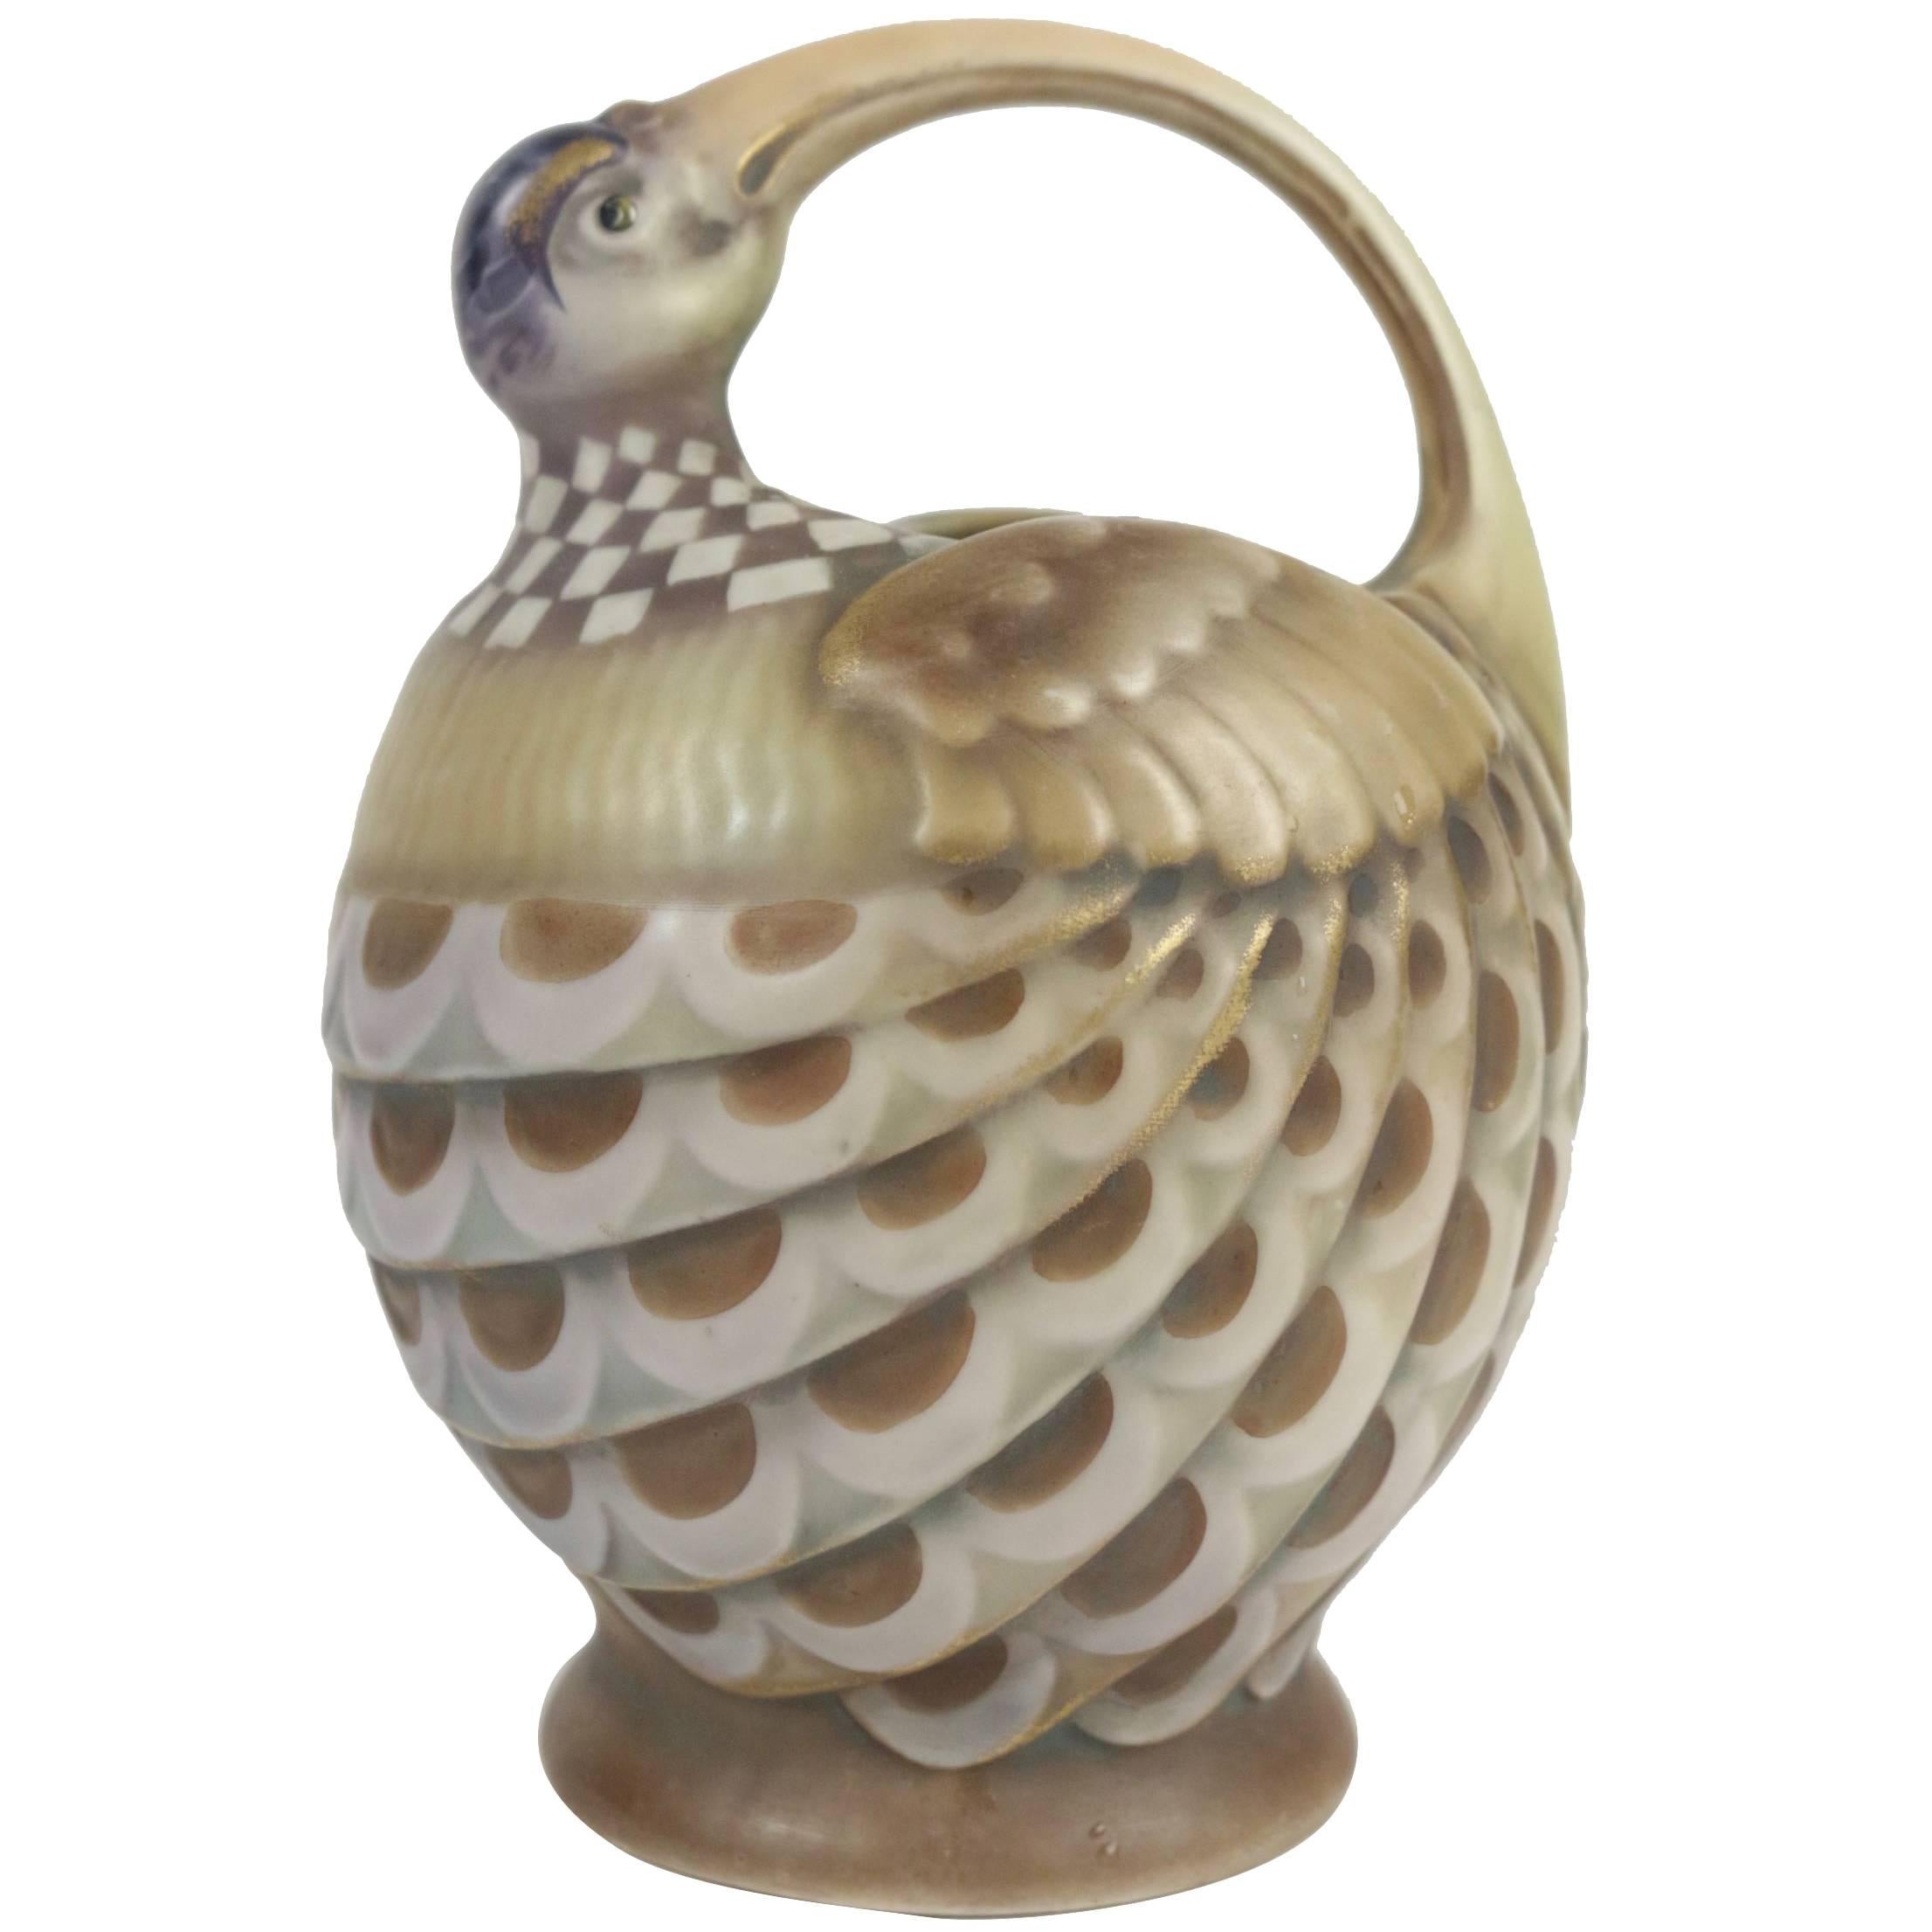 Amphora Vase, Viennese, Austria, 1900